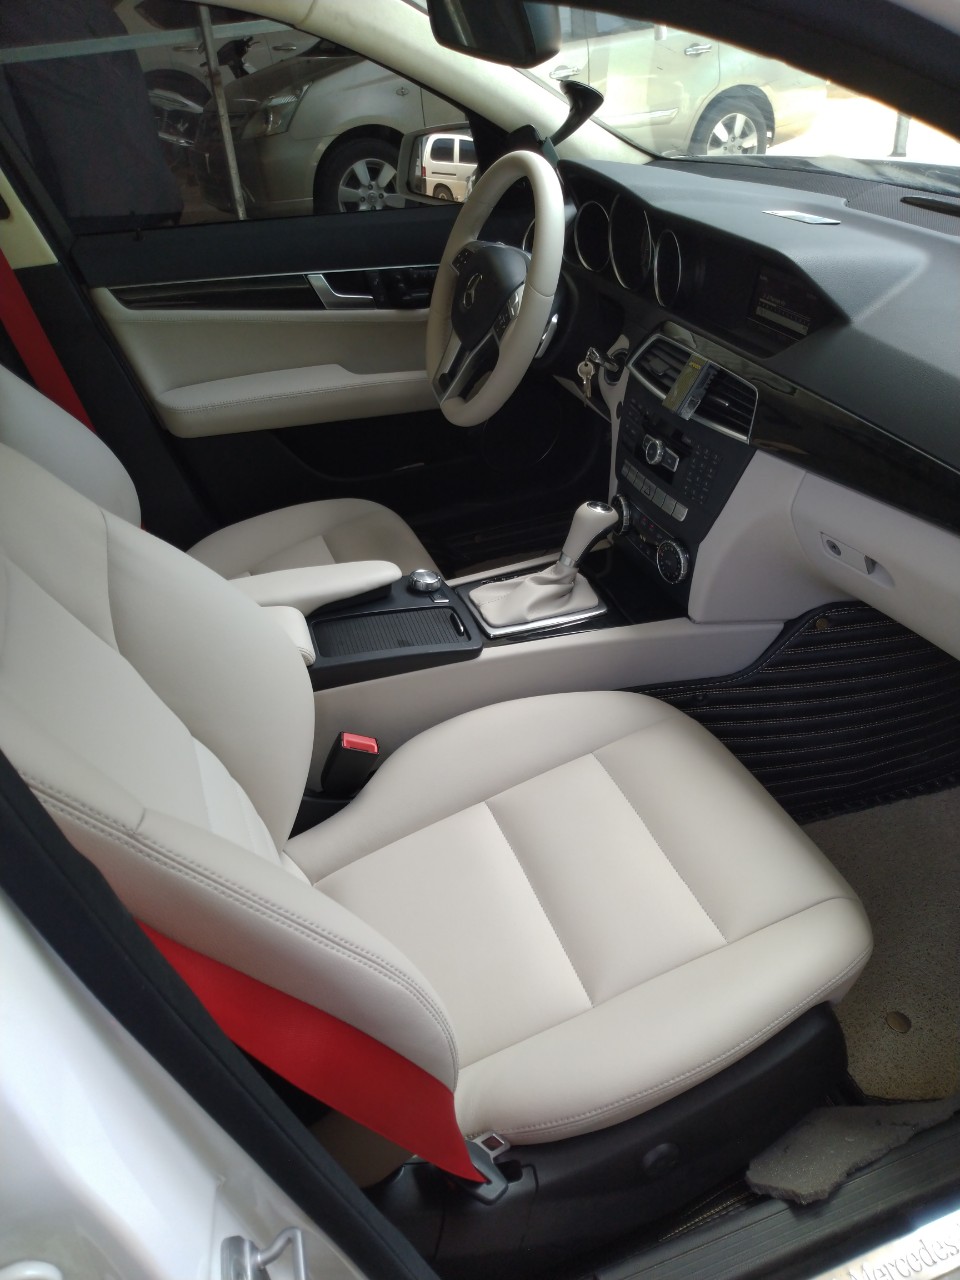 Bọc ghế da cho Mercedes C300 ở Hà Nội | Da cao cấp bọc chuyên nghiệp –  Rambo Auto